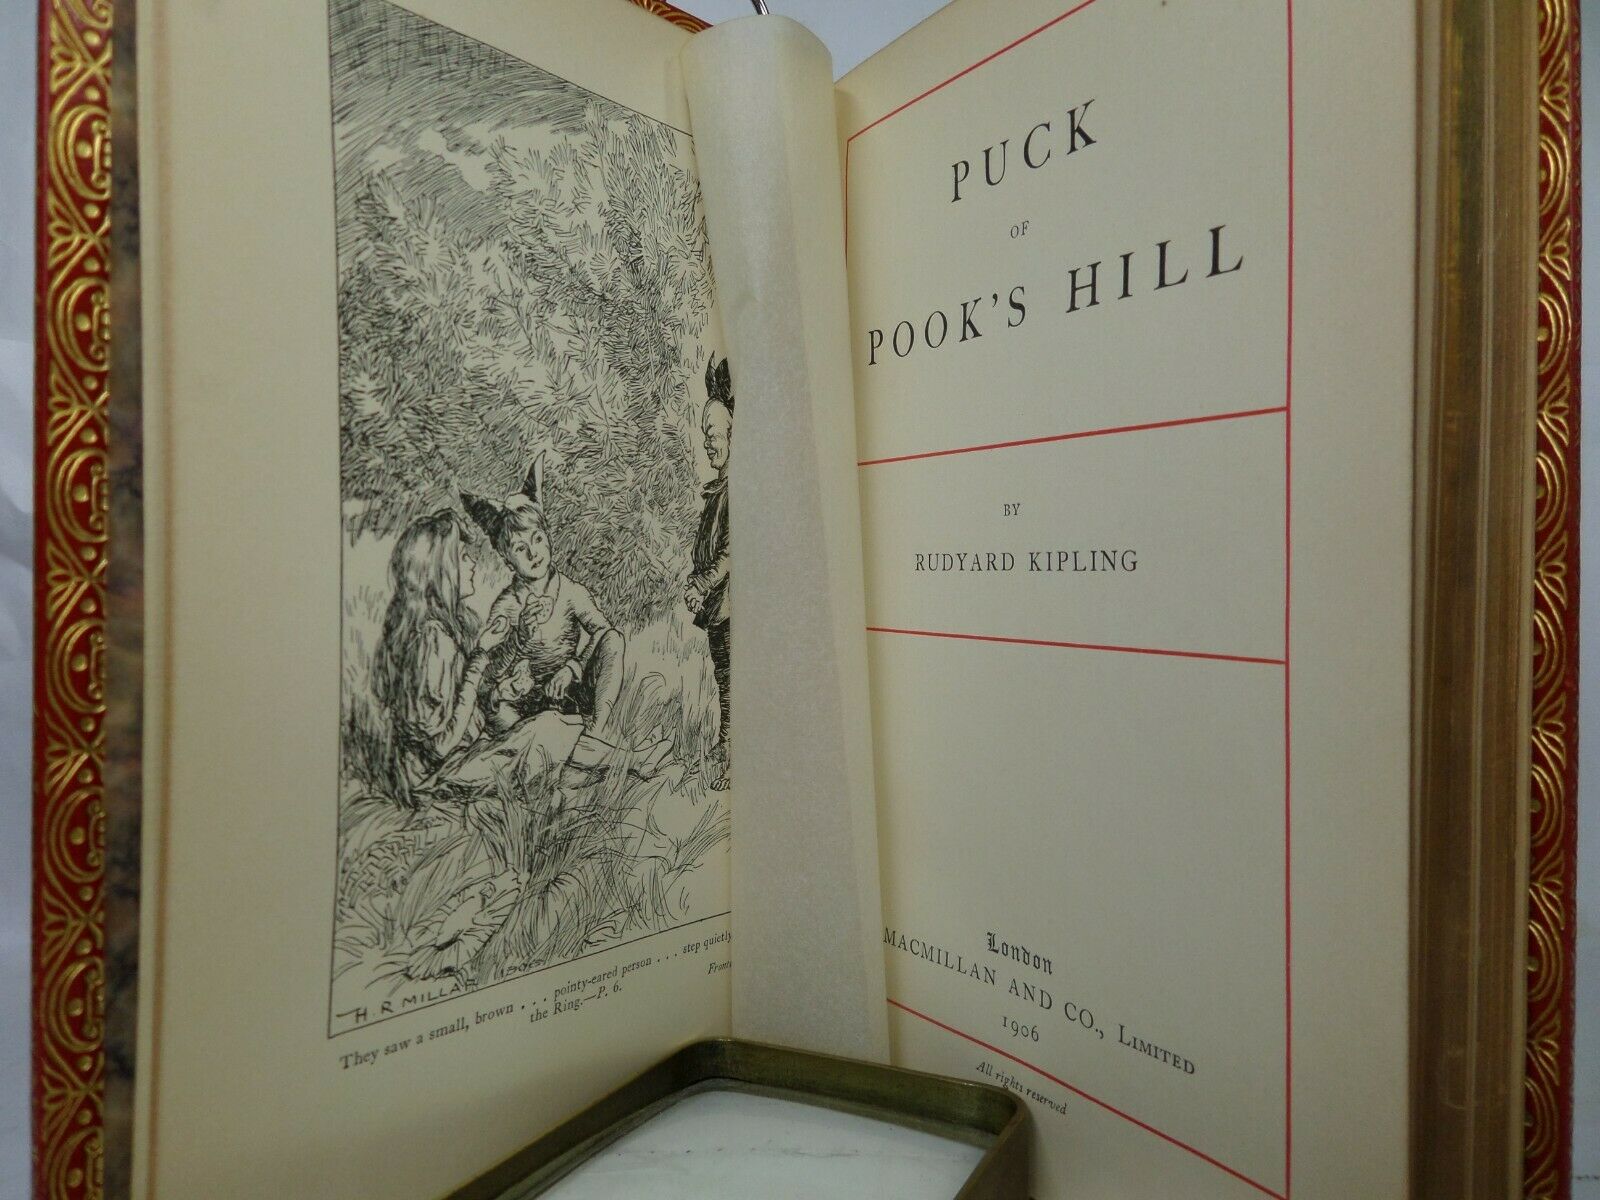 PUCK OF POOK'S HILL BY RUDYARD KIPLING 1906 FIRST EDITION, FINE BAYNTUN BINDING